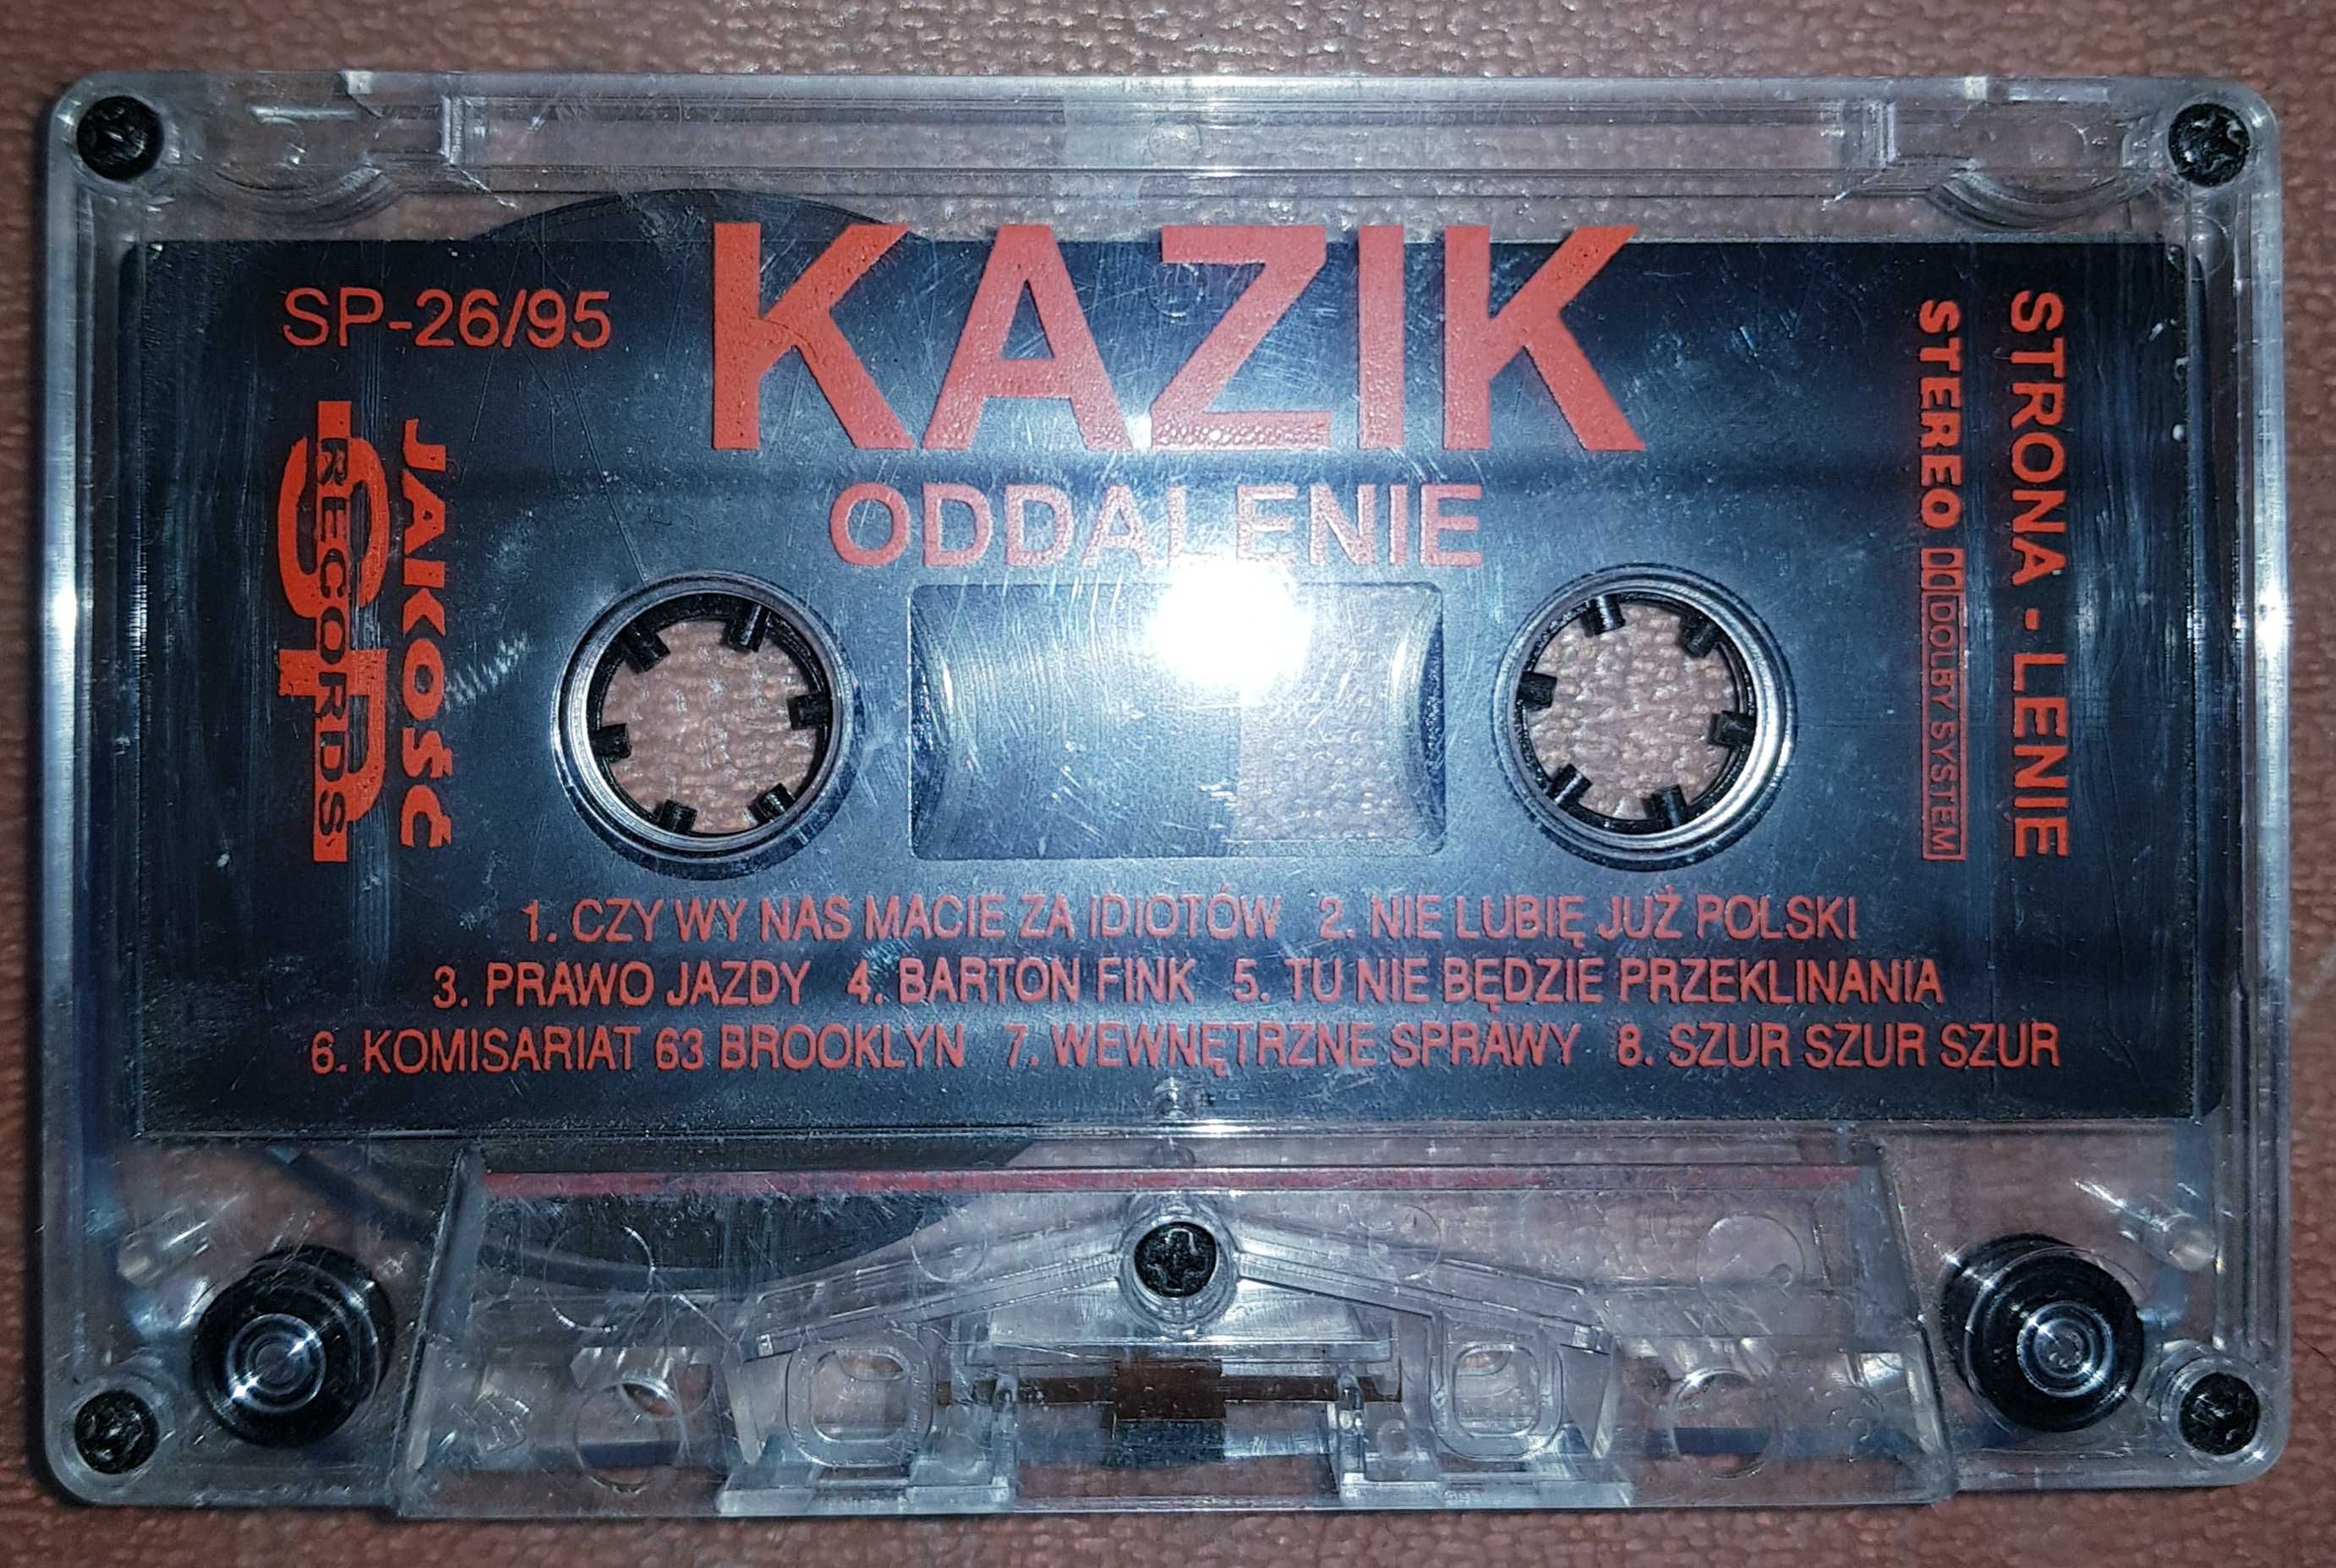 Kazik - Oddalenie  SP Records SP-26/95 - oryginalna kaseta audio!